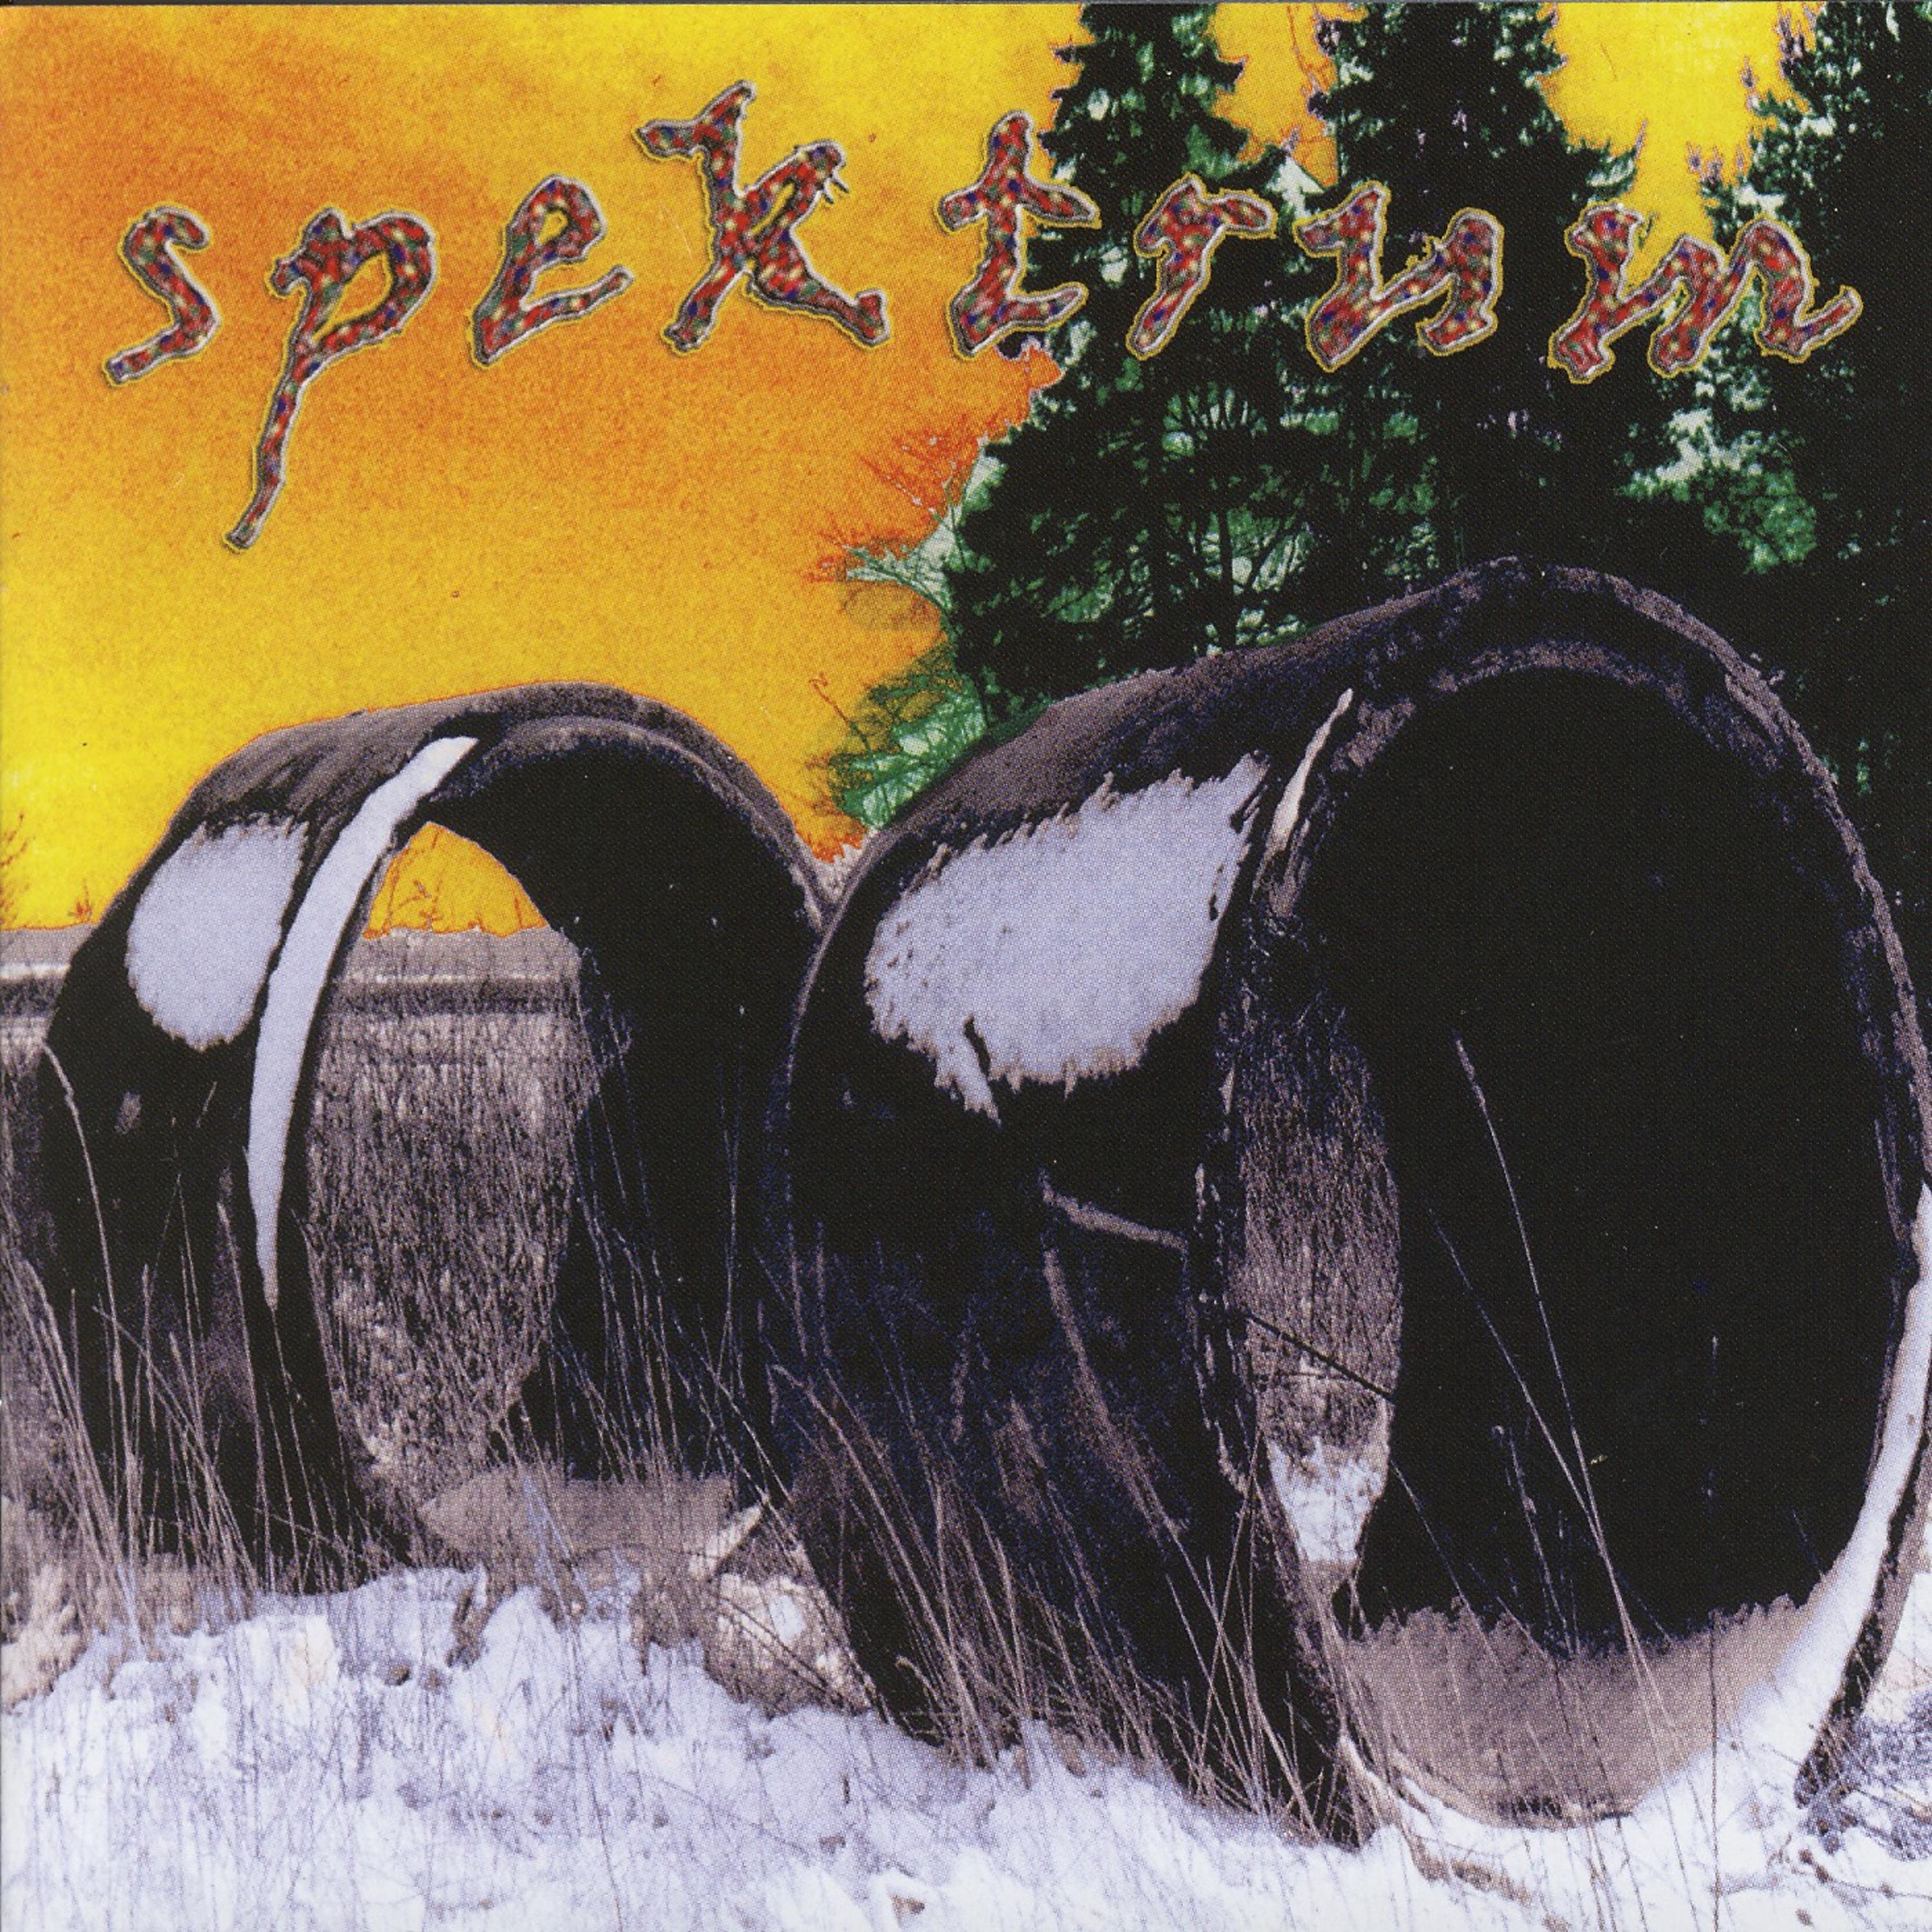 Постер альбома Spektrum